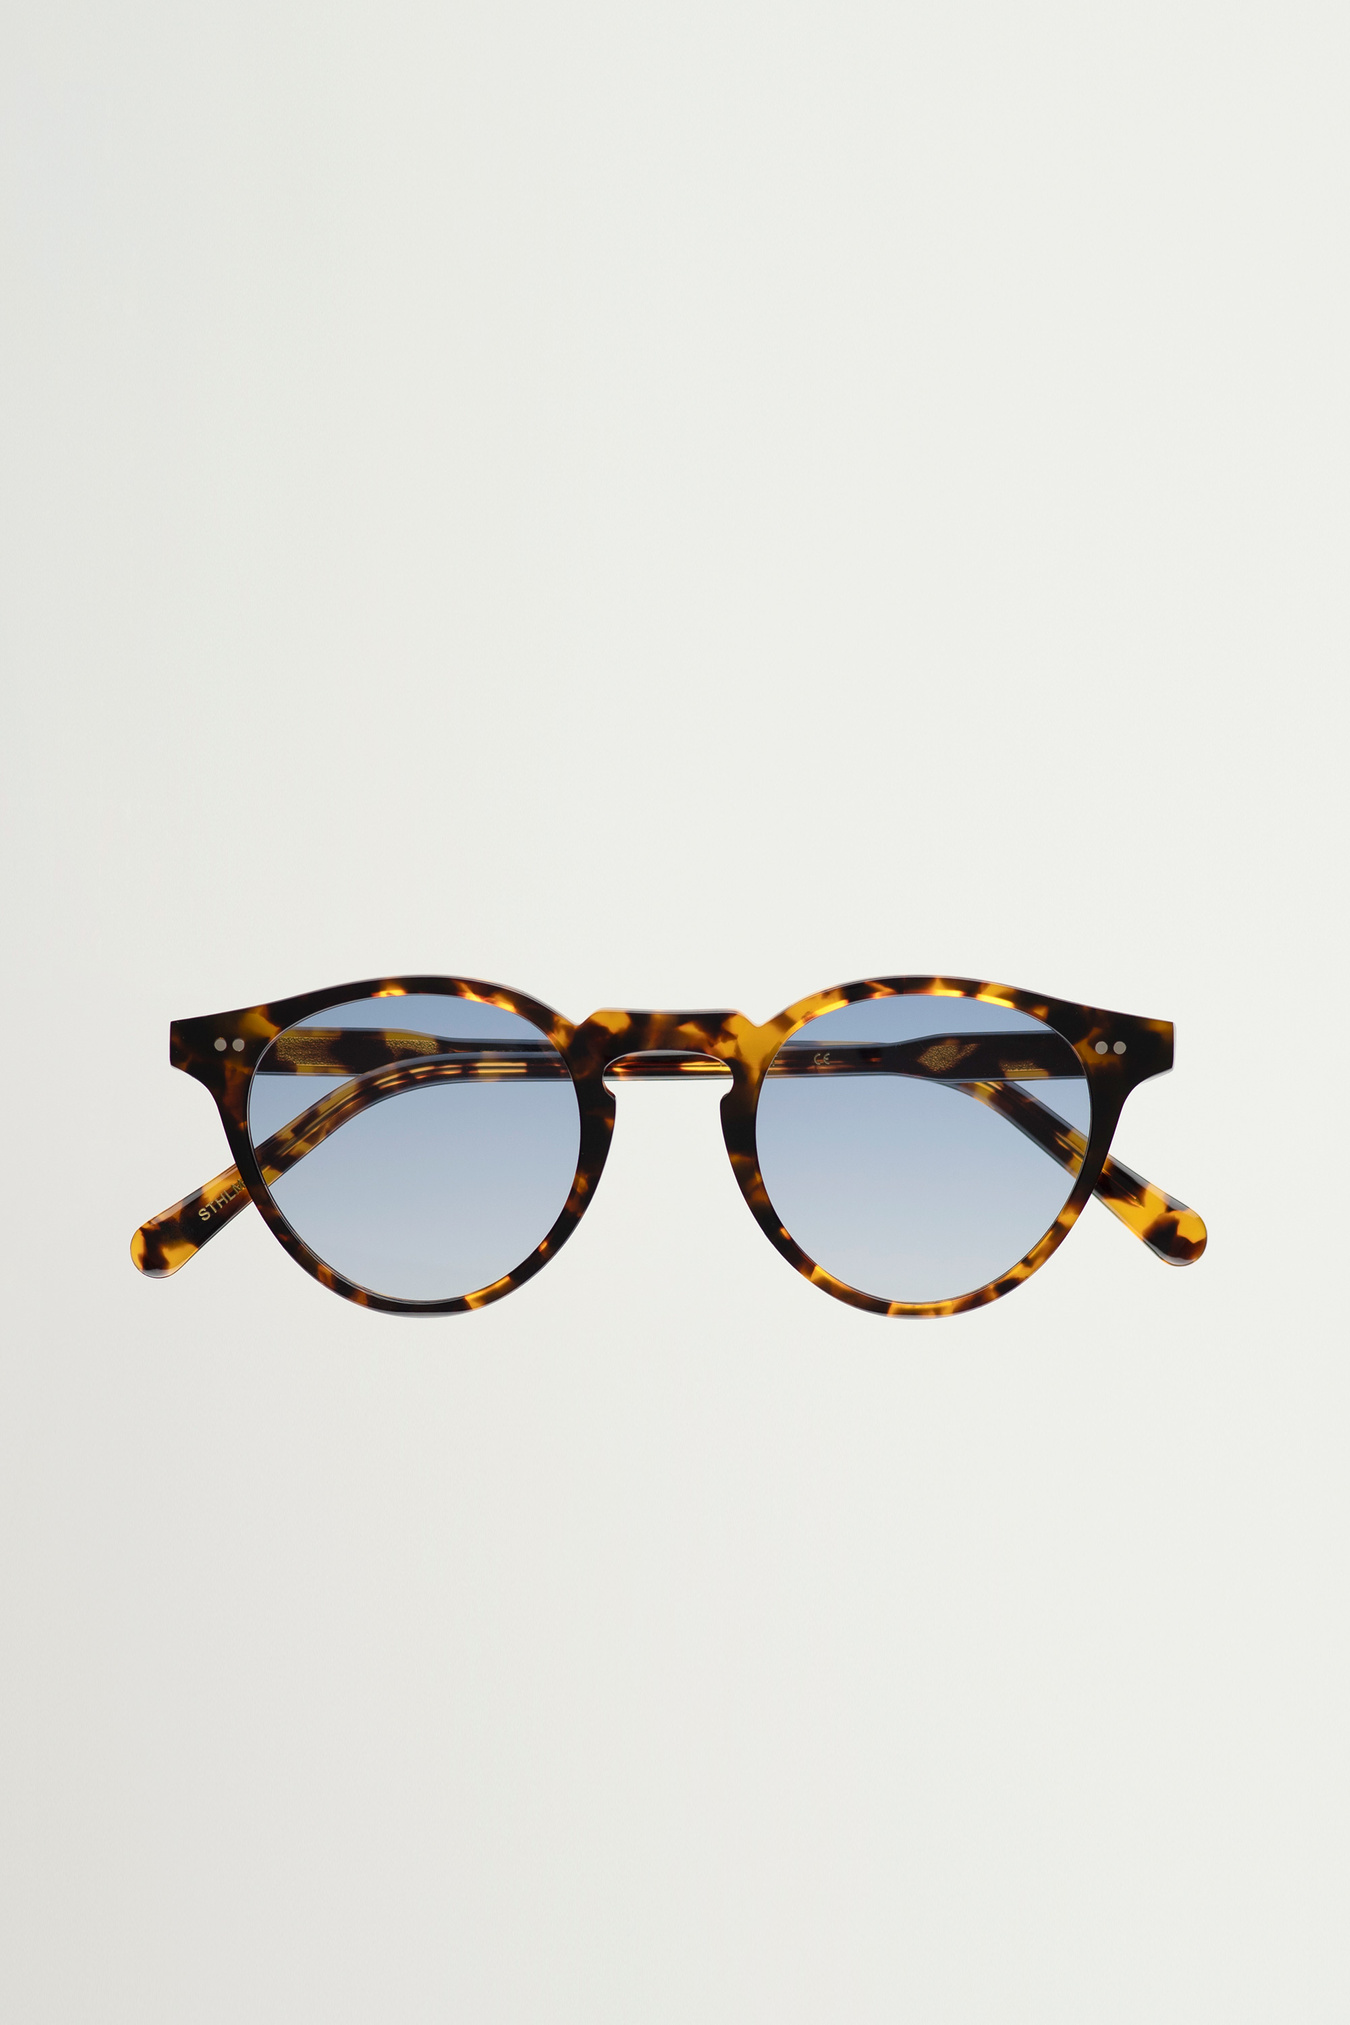 Monokel Eyewear Forest Havana - Blue Gradient Lens Sunglasses 